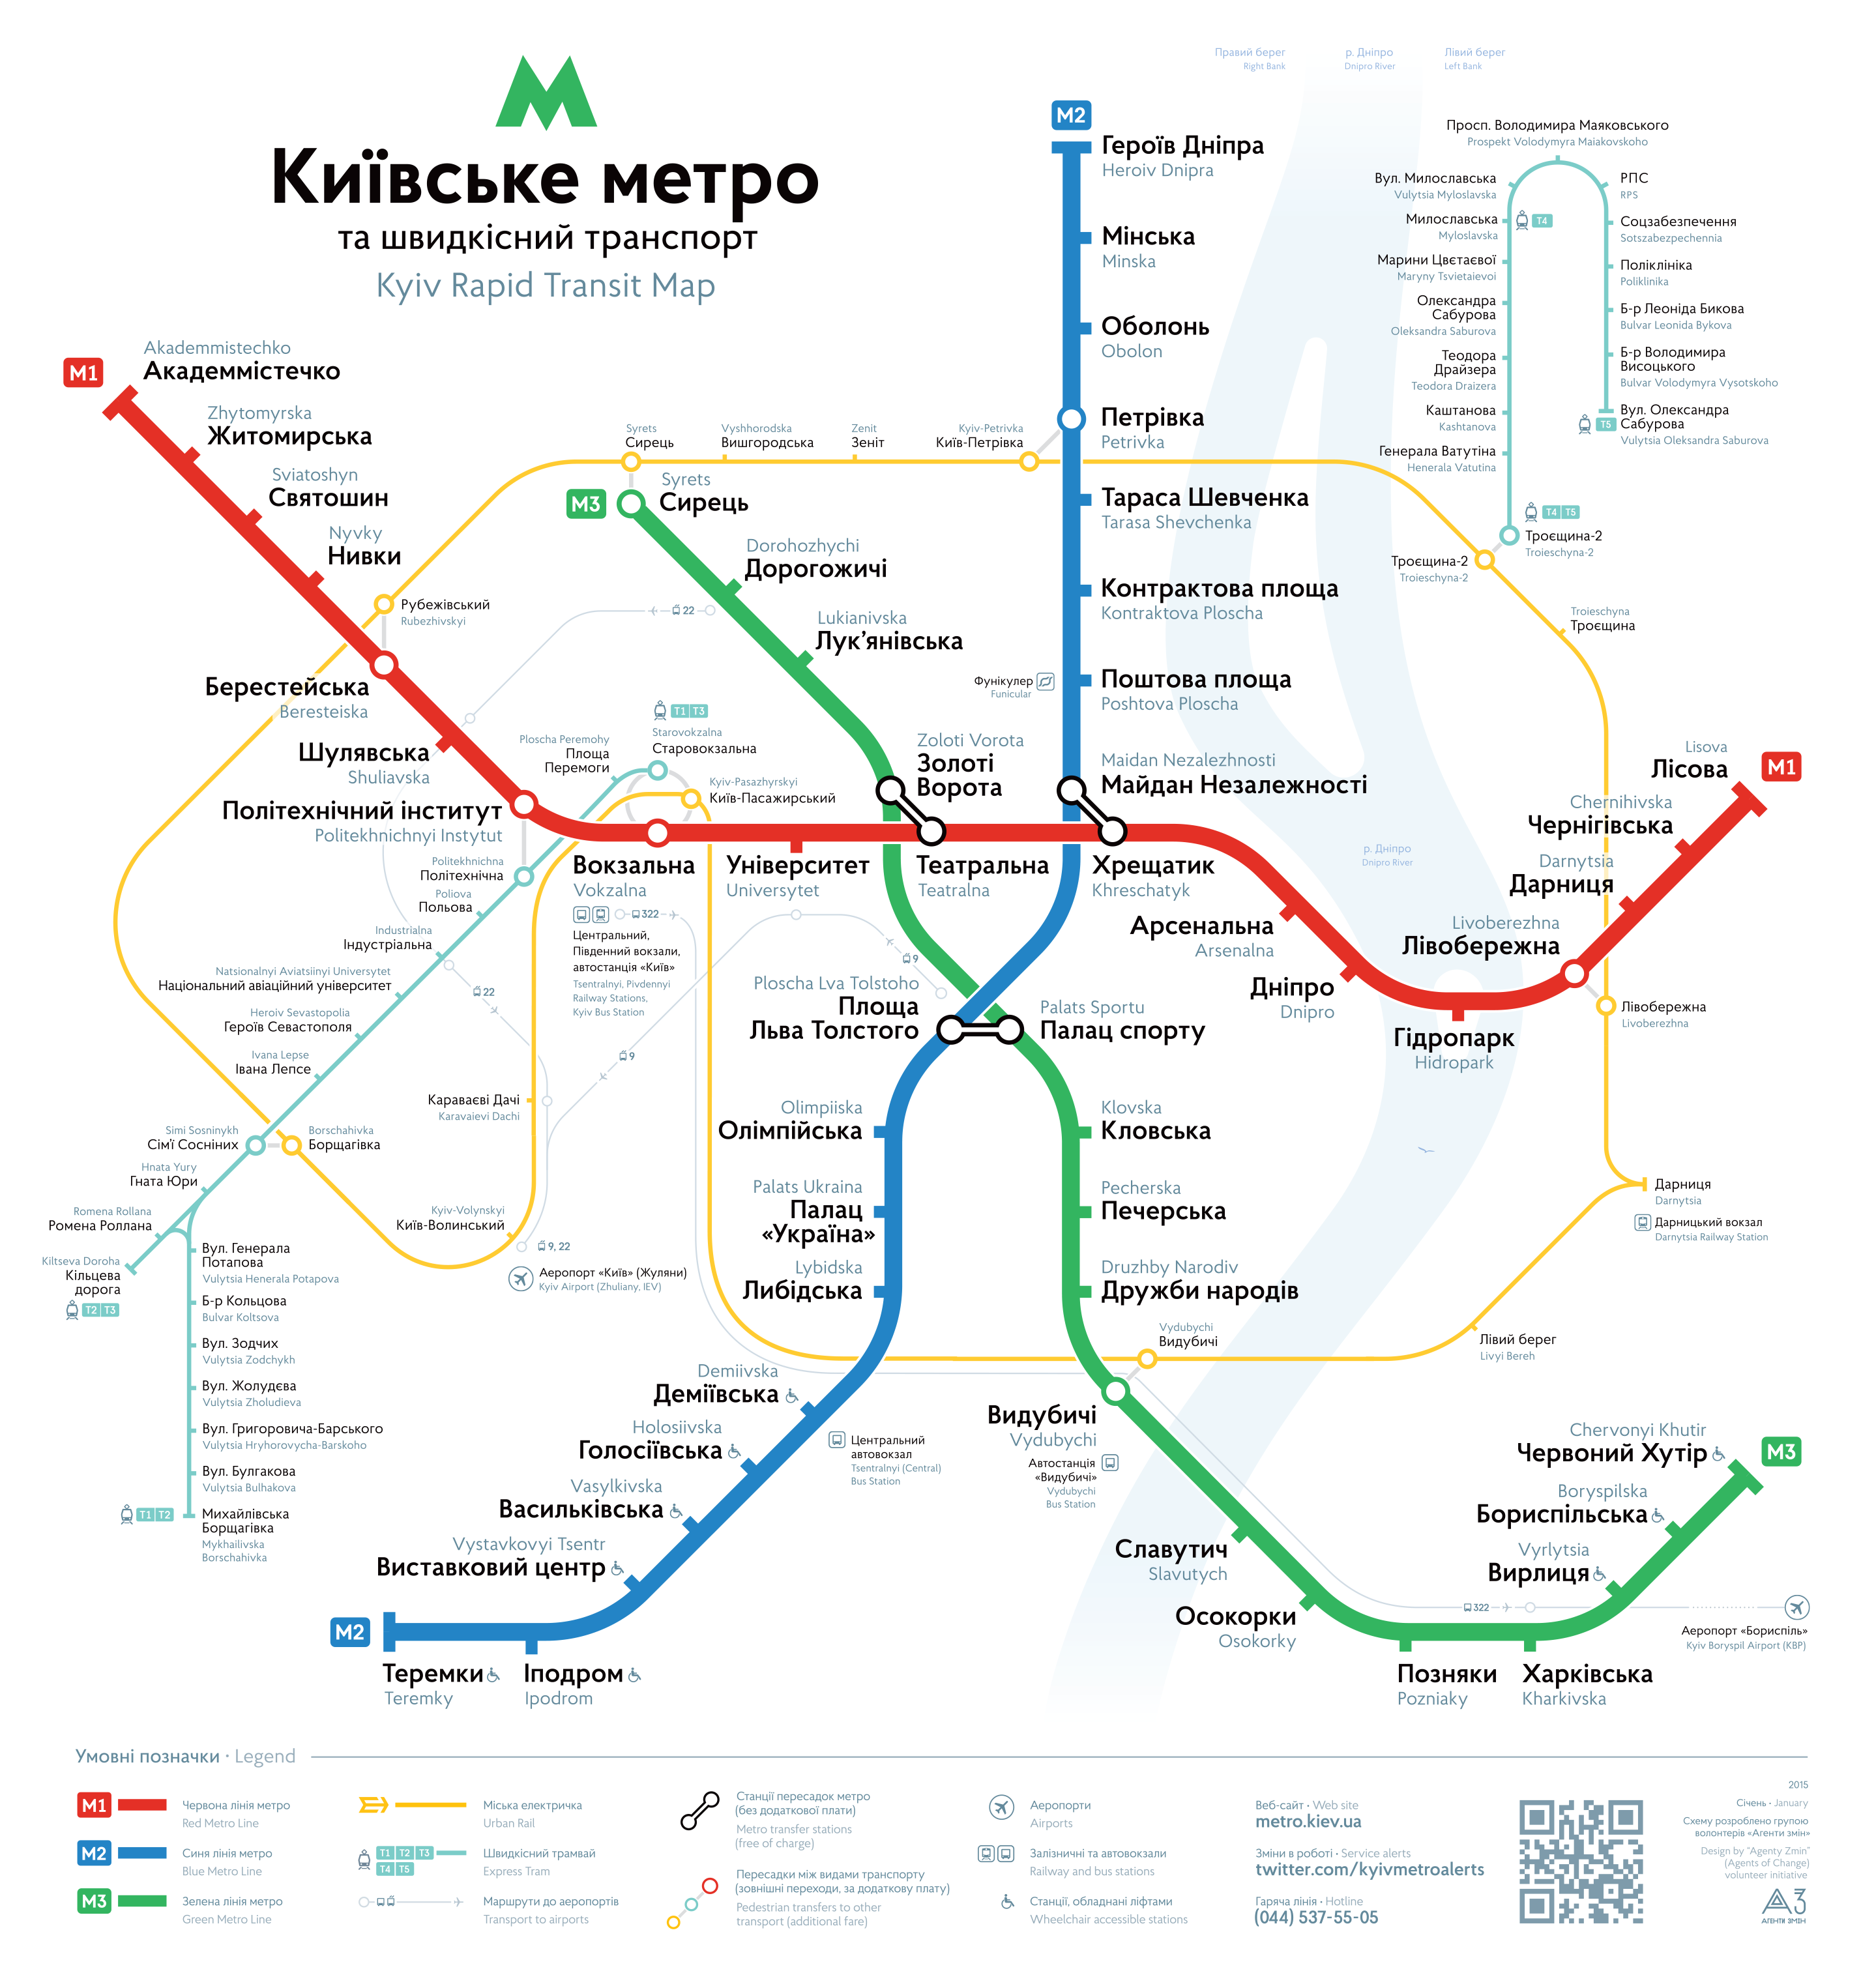 МЕТРО КИЕВА - Схема линий Киевского метрополитена